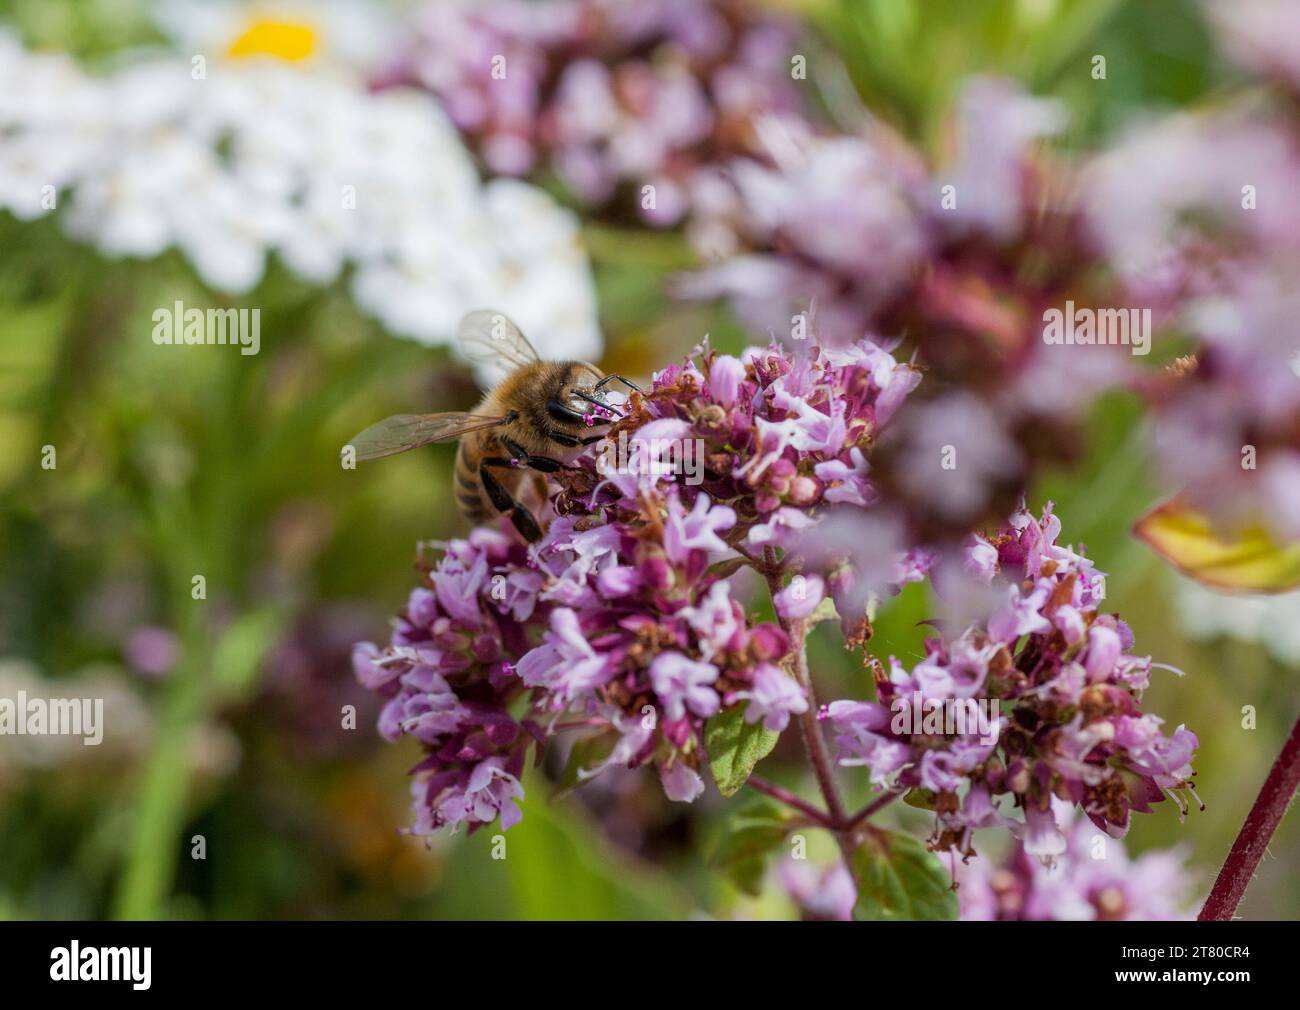 BEE on an oregano flower in garden Stock Photo